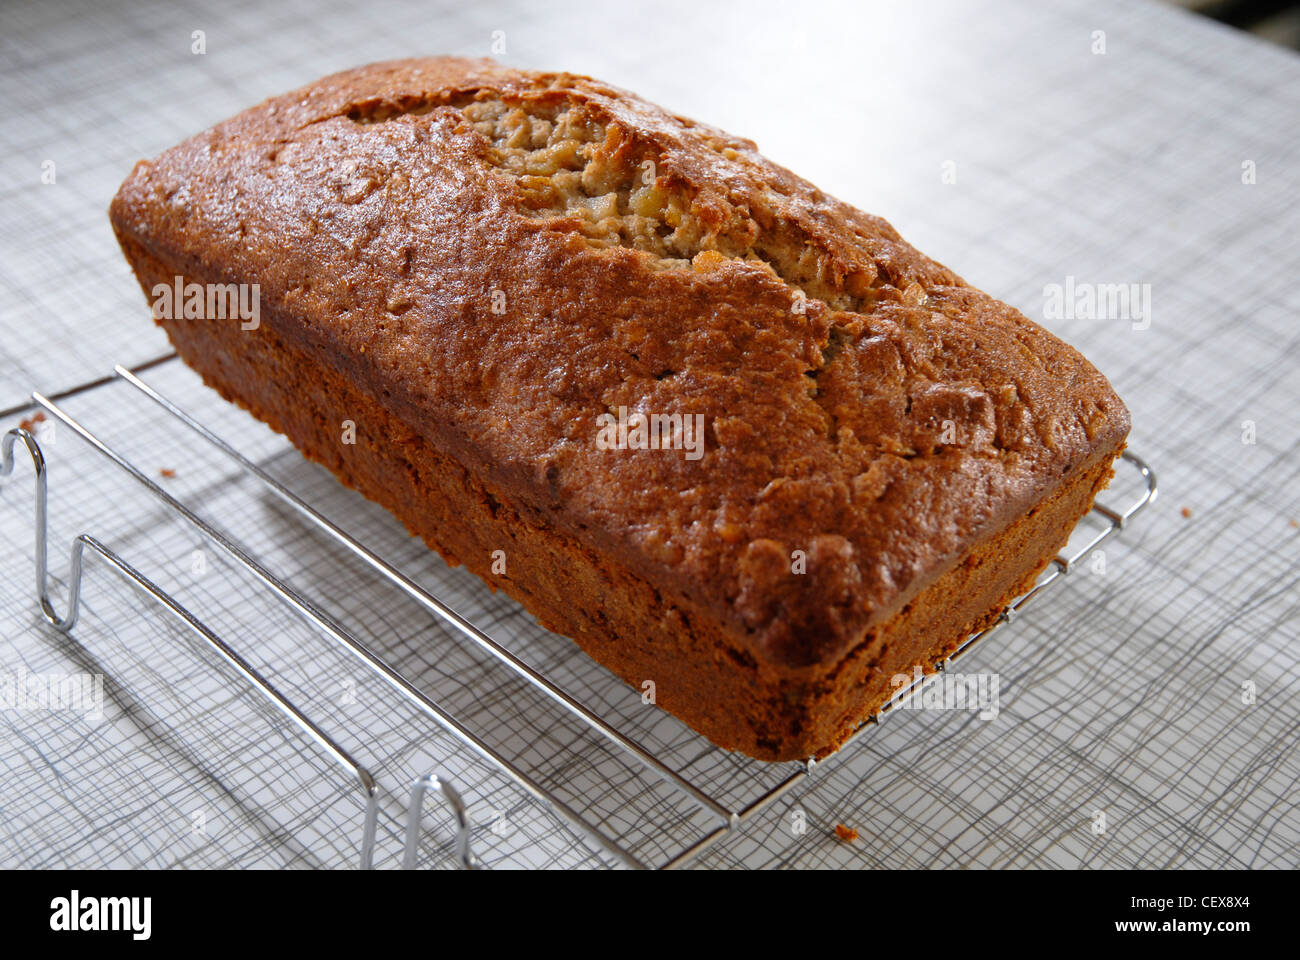 A freshly baked banana loaf cake. Stock Photo